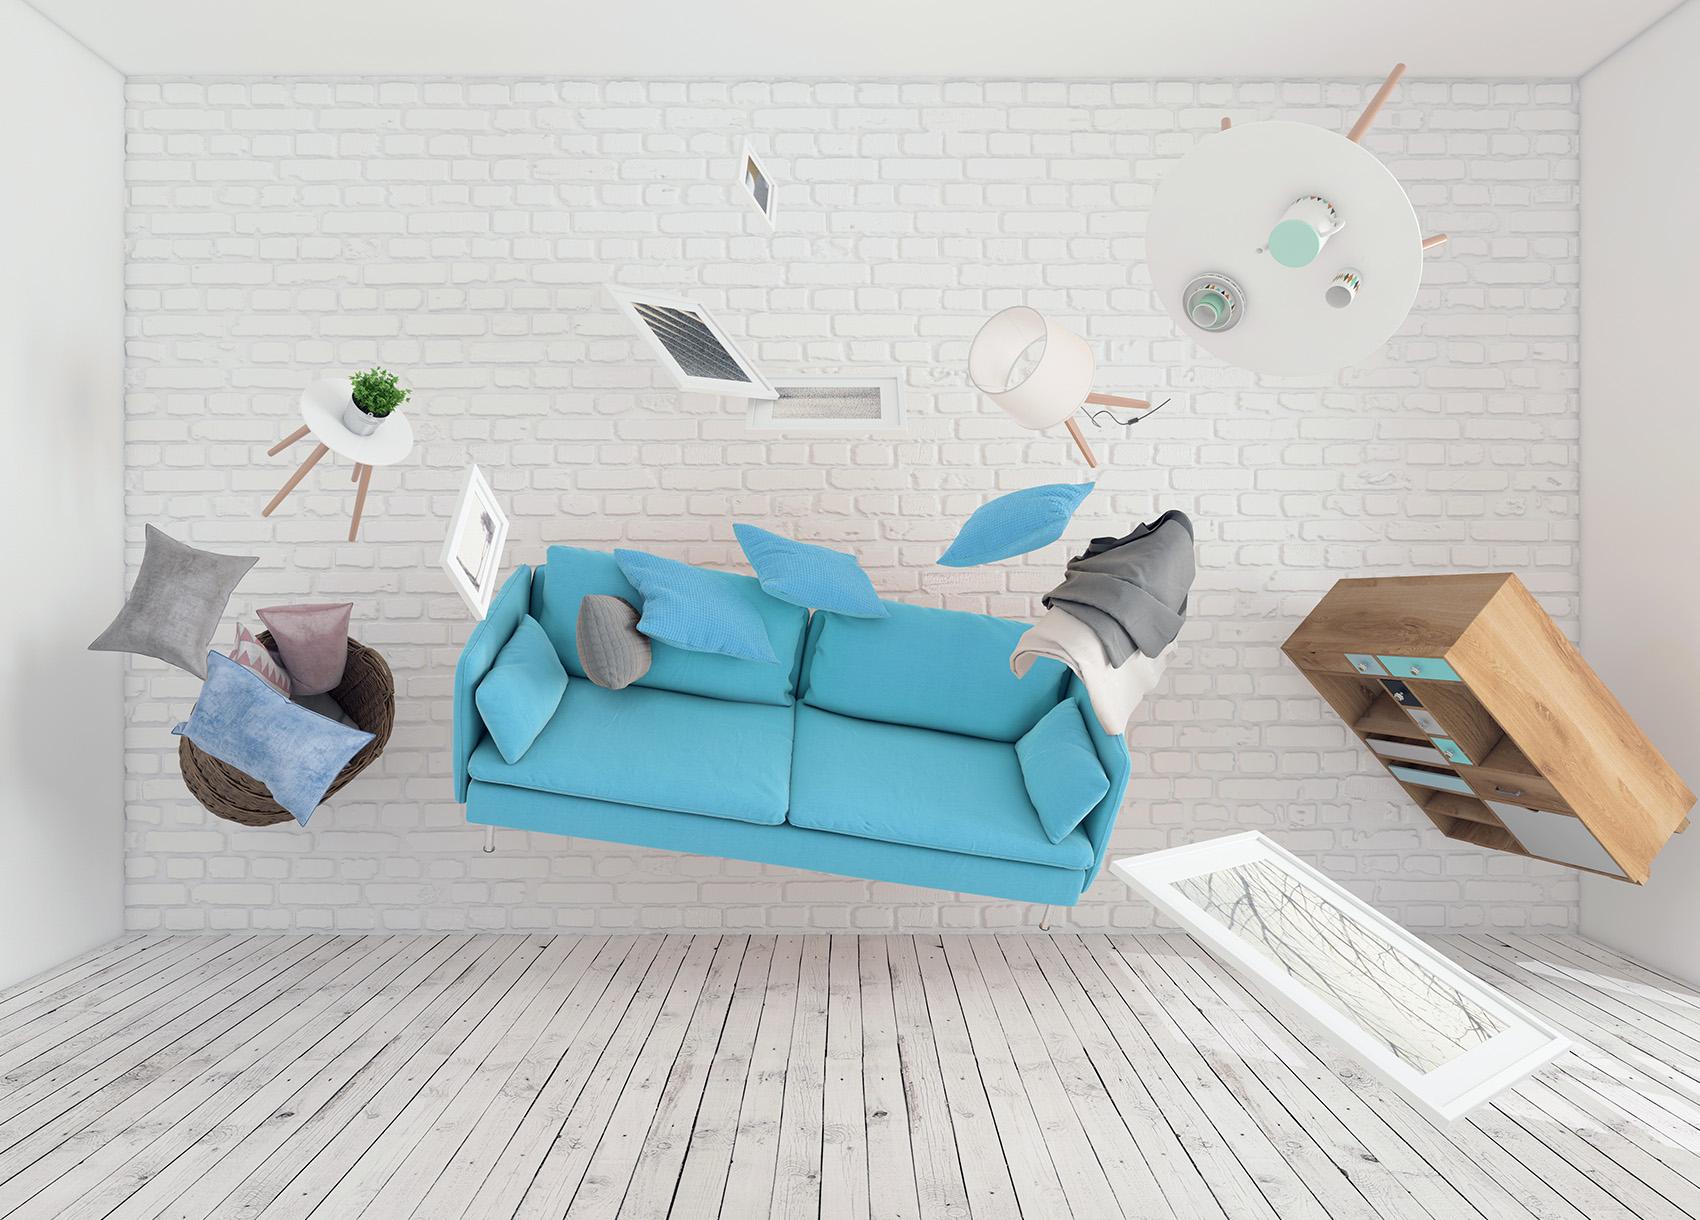 Furniture visual